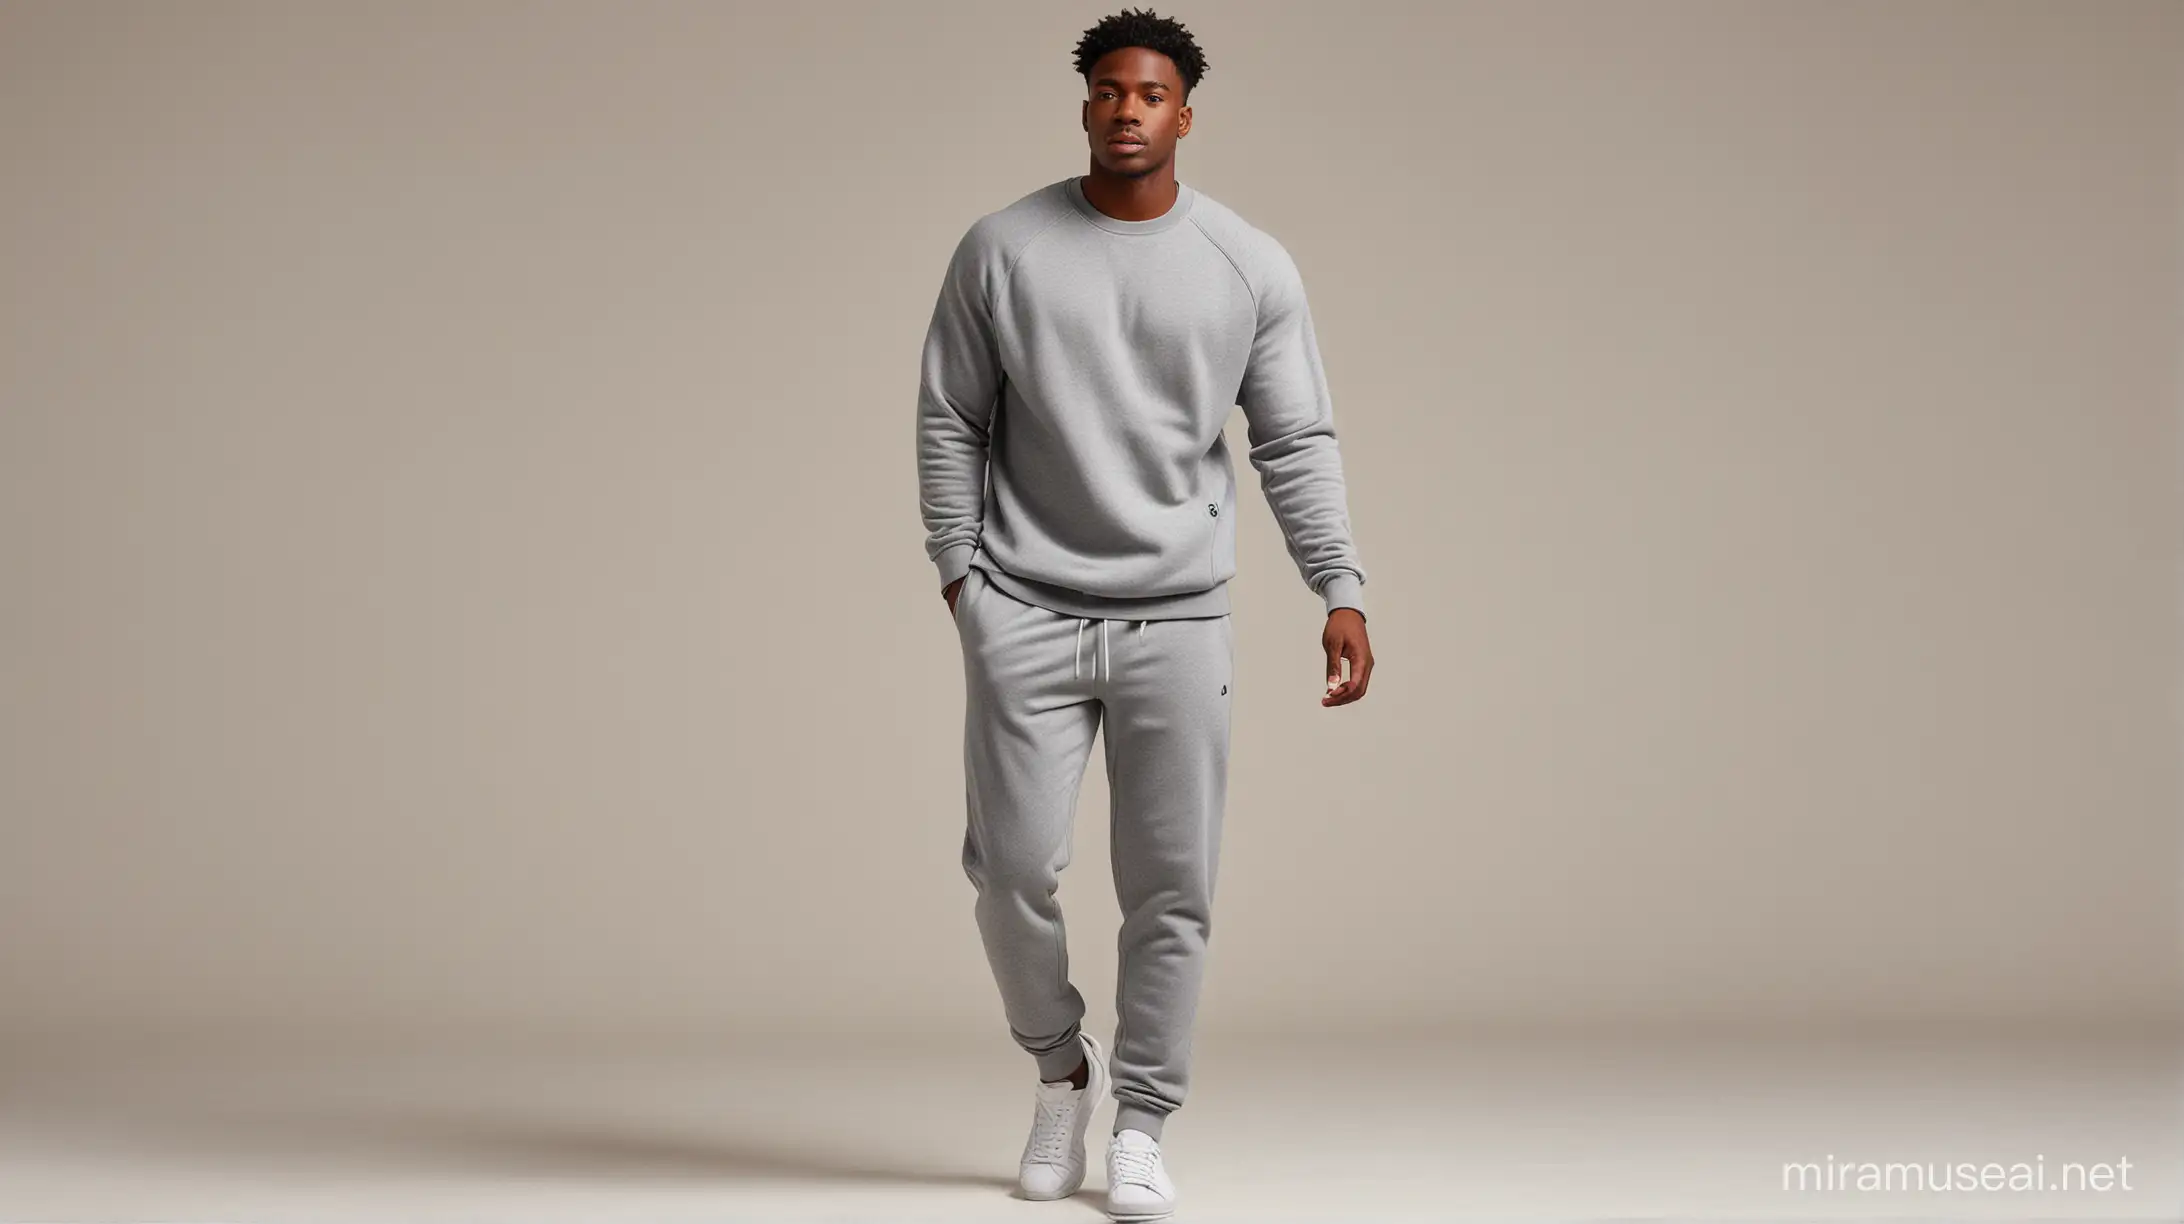 black man model full body with a plain grey crewneck set on and plain jogging pants on